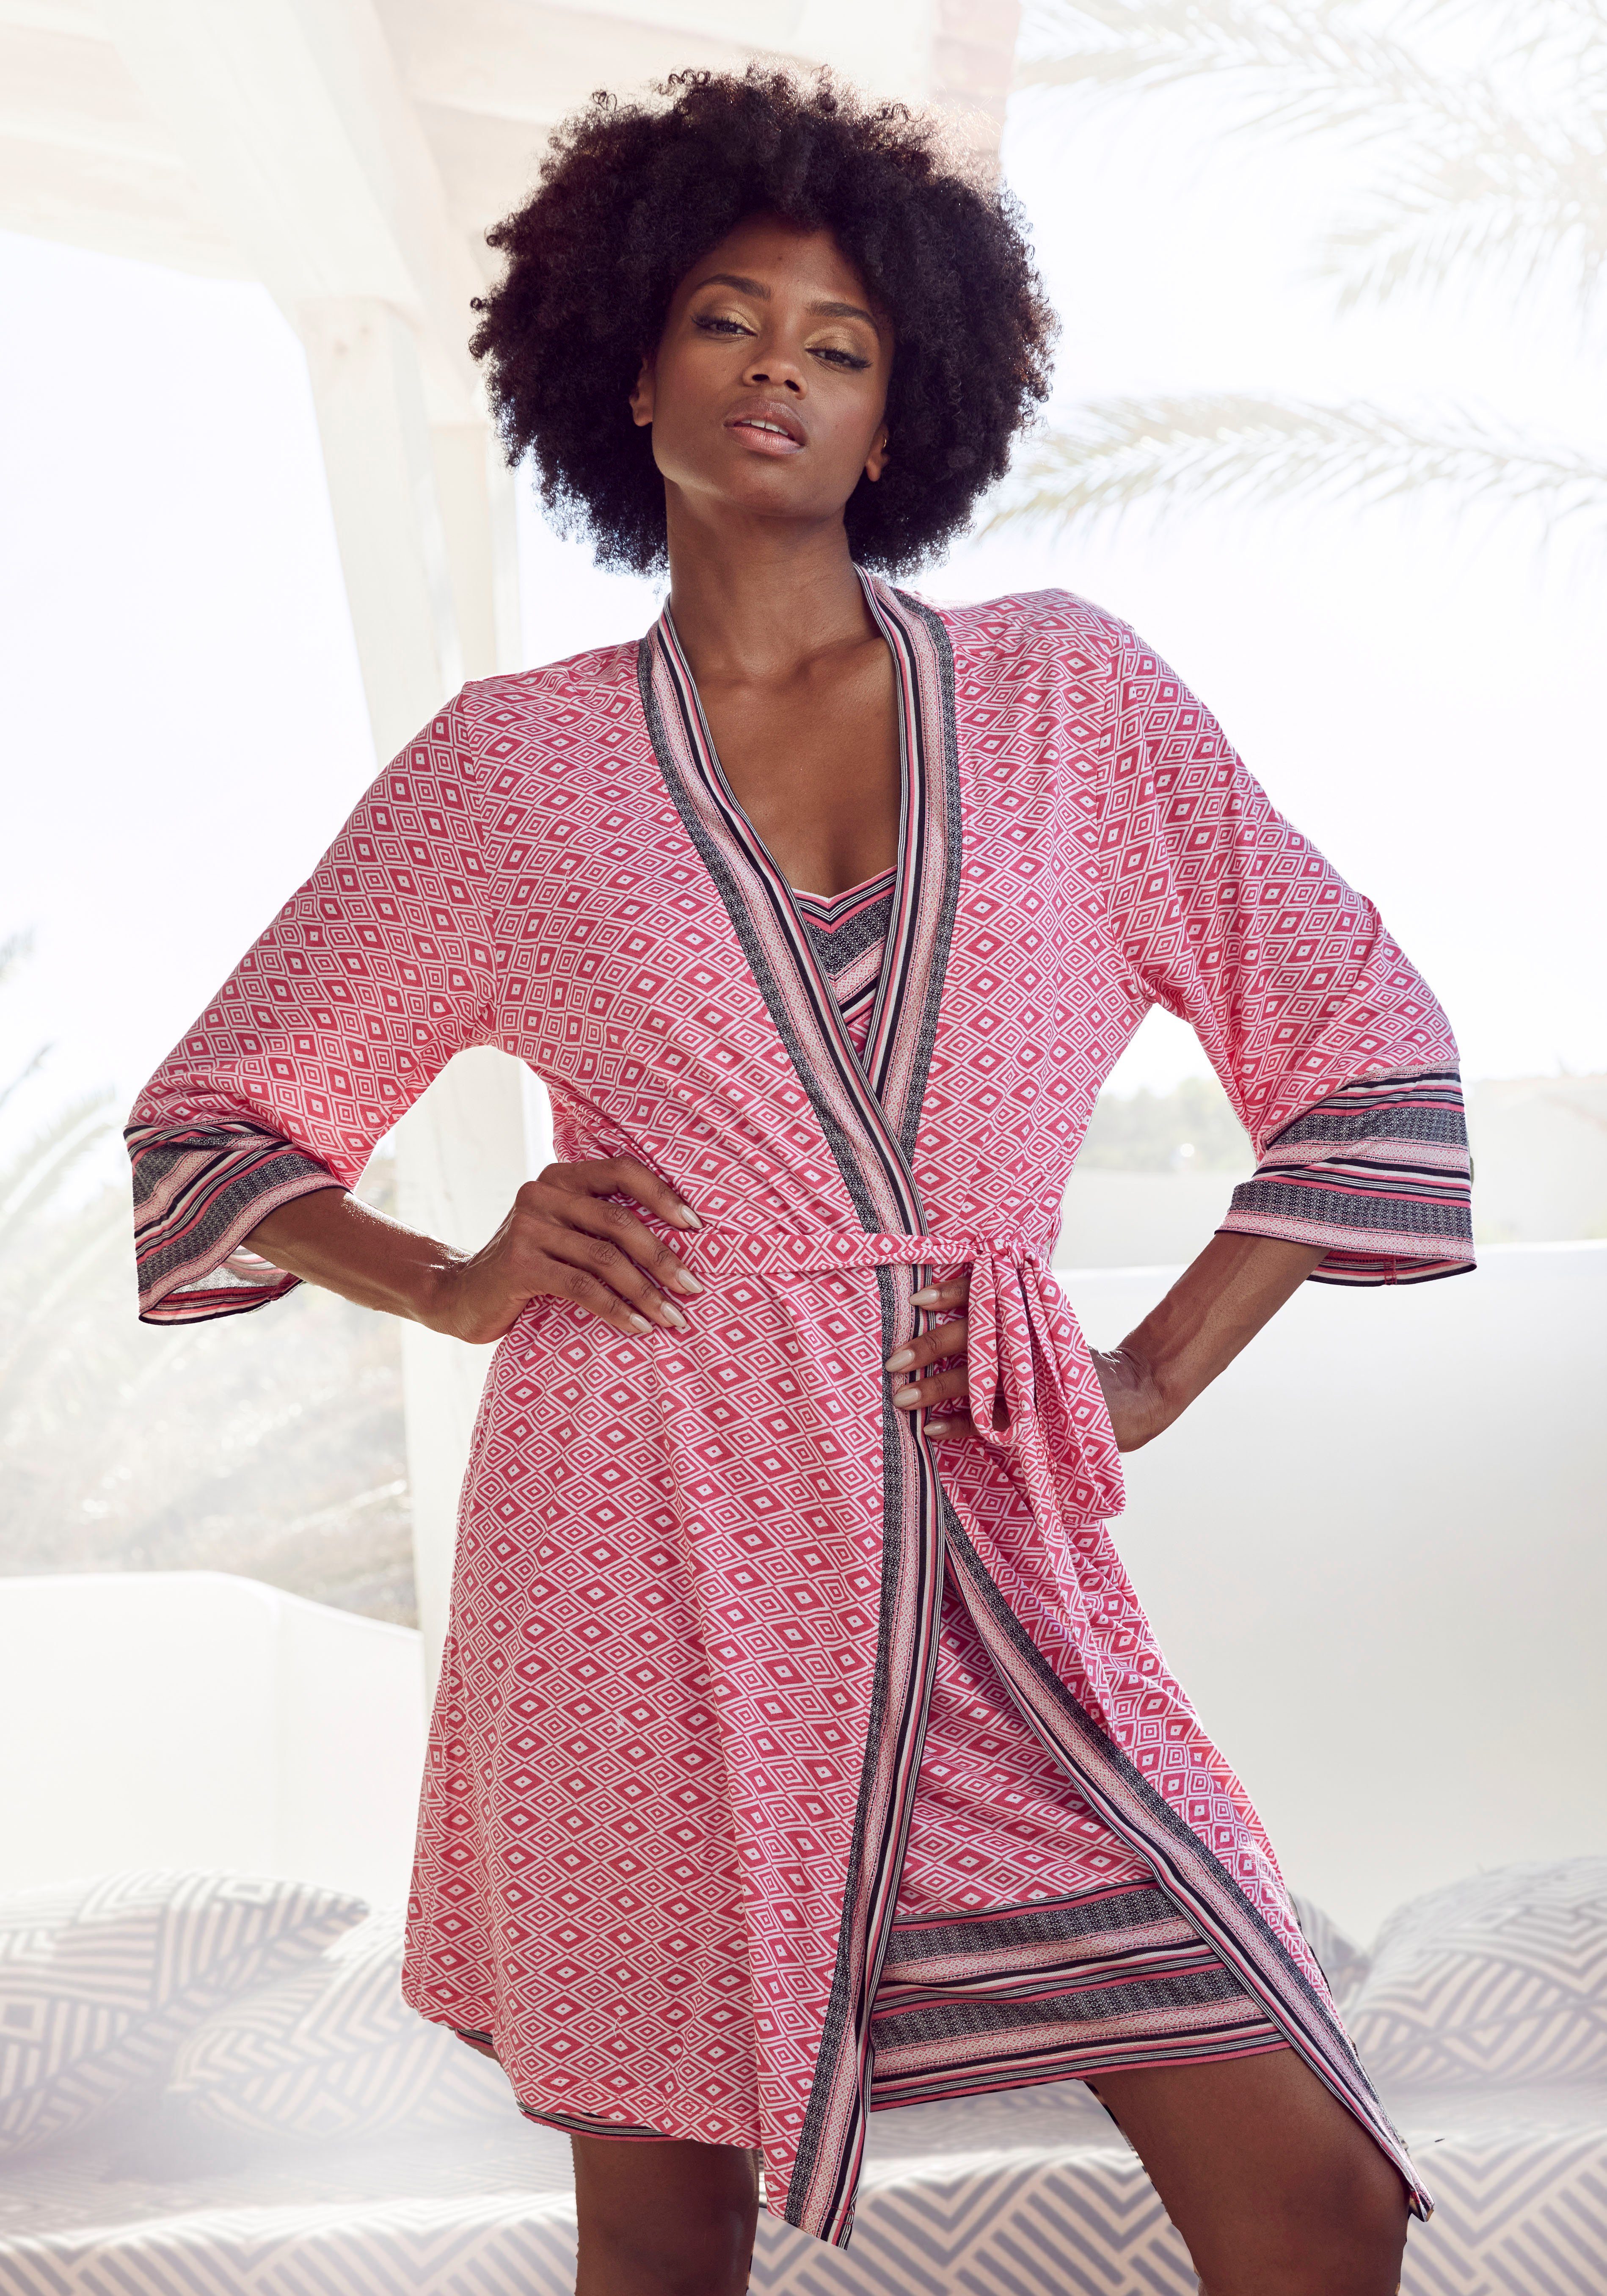 Vivance Dreams Kimono, pink Single-Jersey, Gürtel, Kurzform, schönem gemustert Ethno-Design Kimono-Kragen, in